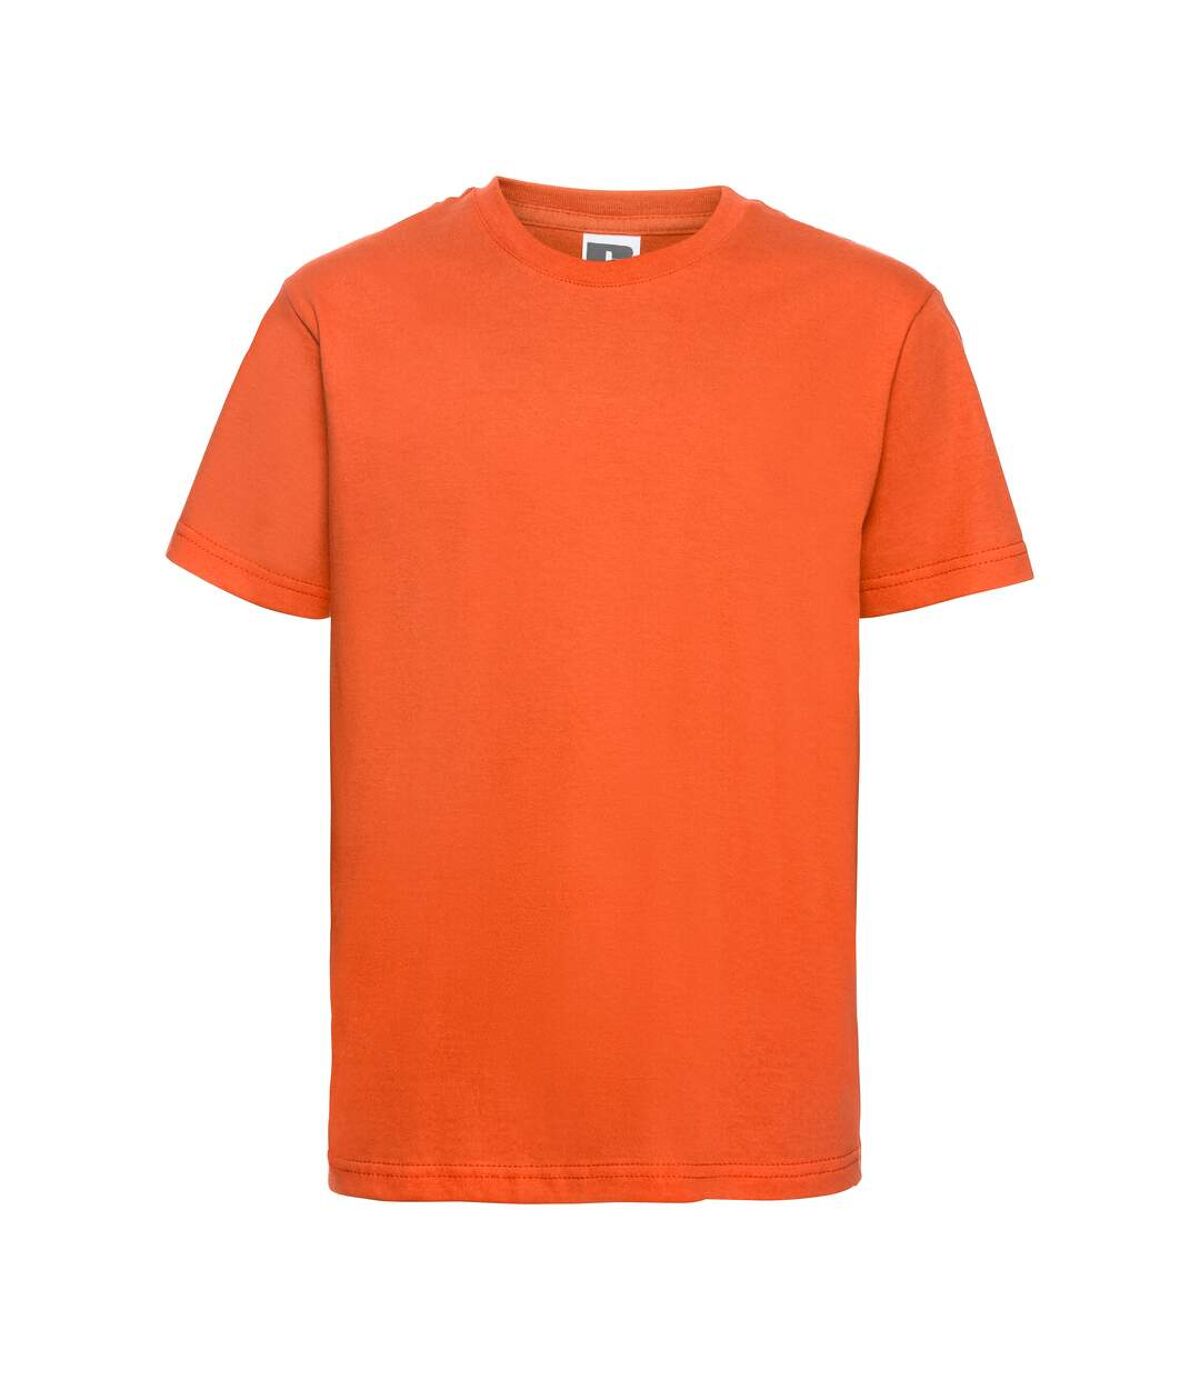 Russell Mens Slim Short Sleeve T-Shirt (Orange)